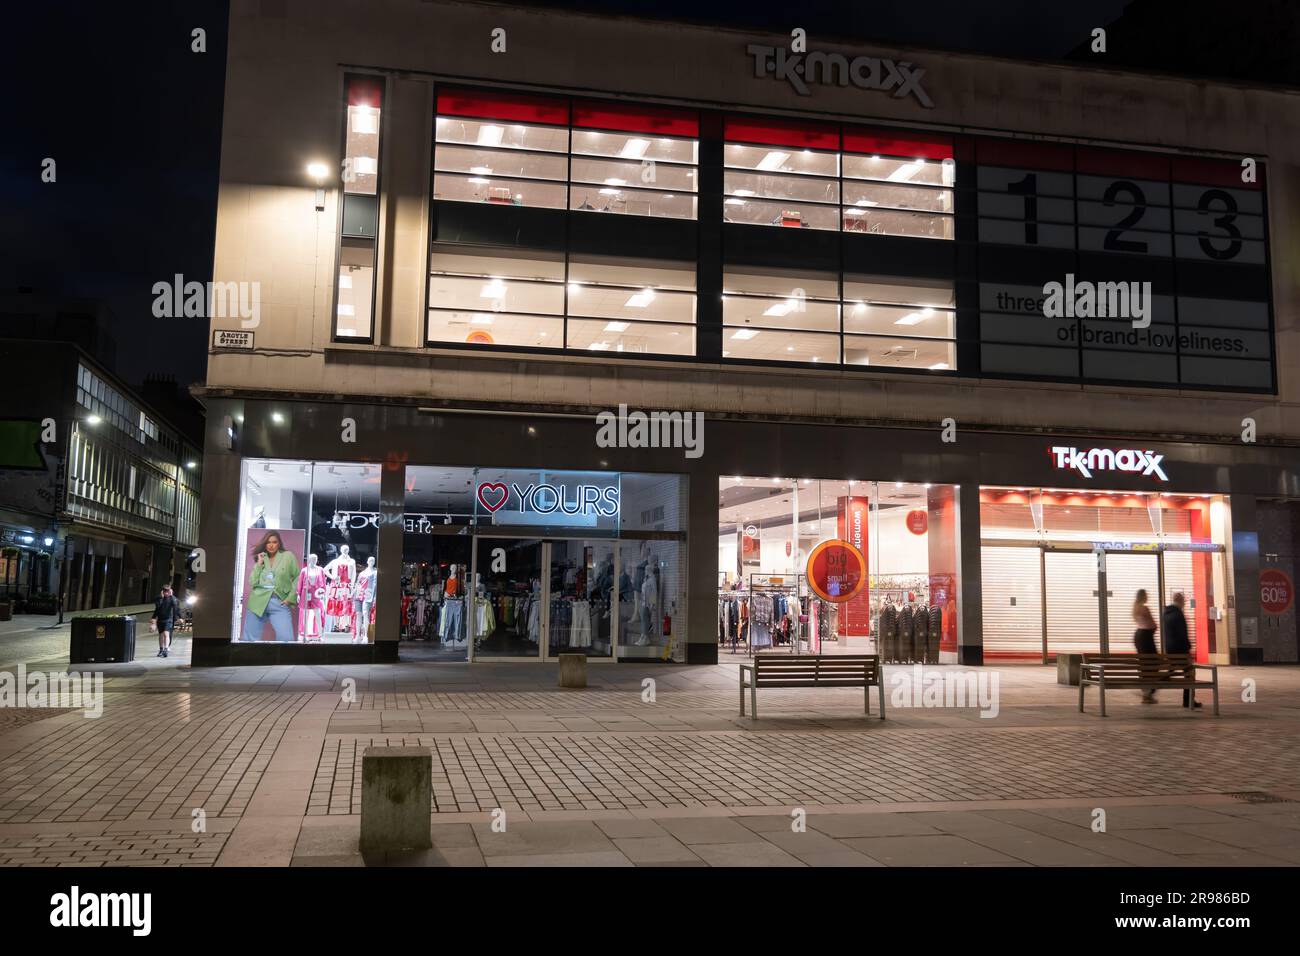 TK Maxx department store at night on Argyle St in city of Glasgow, Scotland, UK. Stock Photo